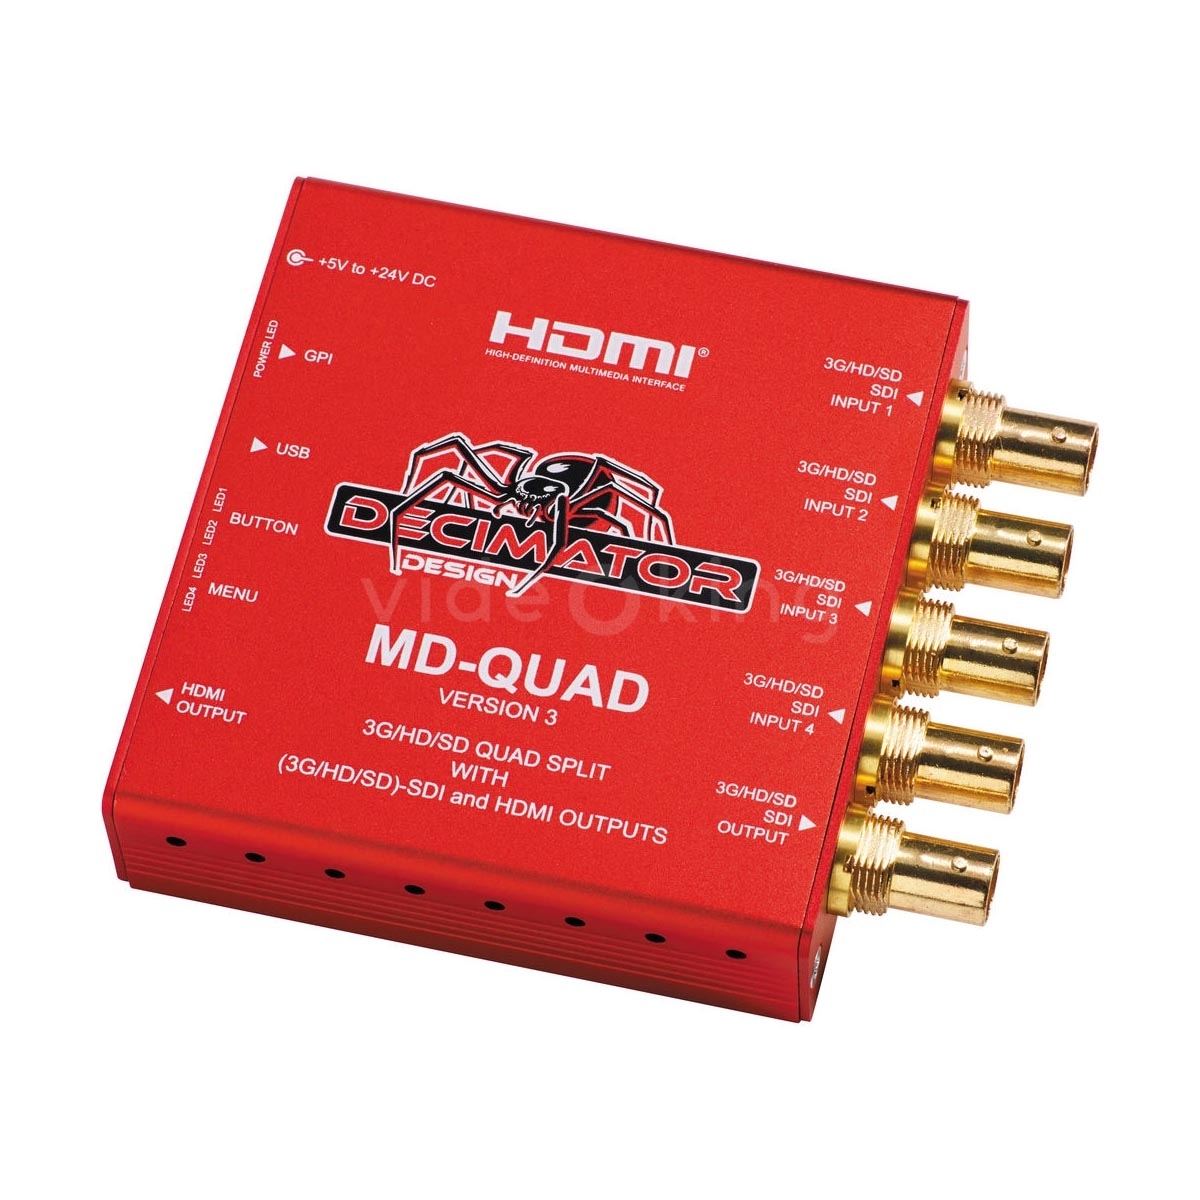 Decimator MD-QUAD v3 3G/HD/SD Quad Split